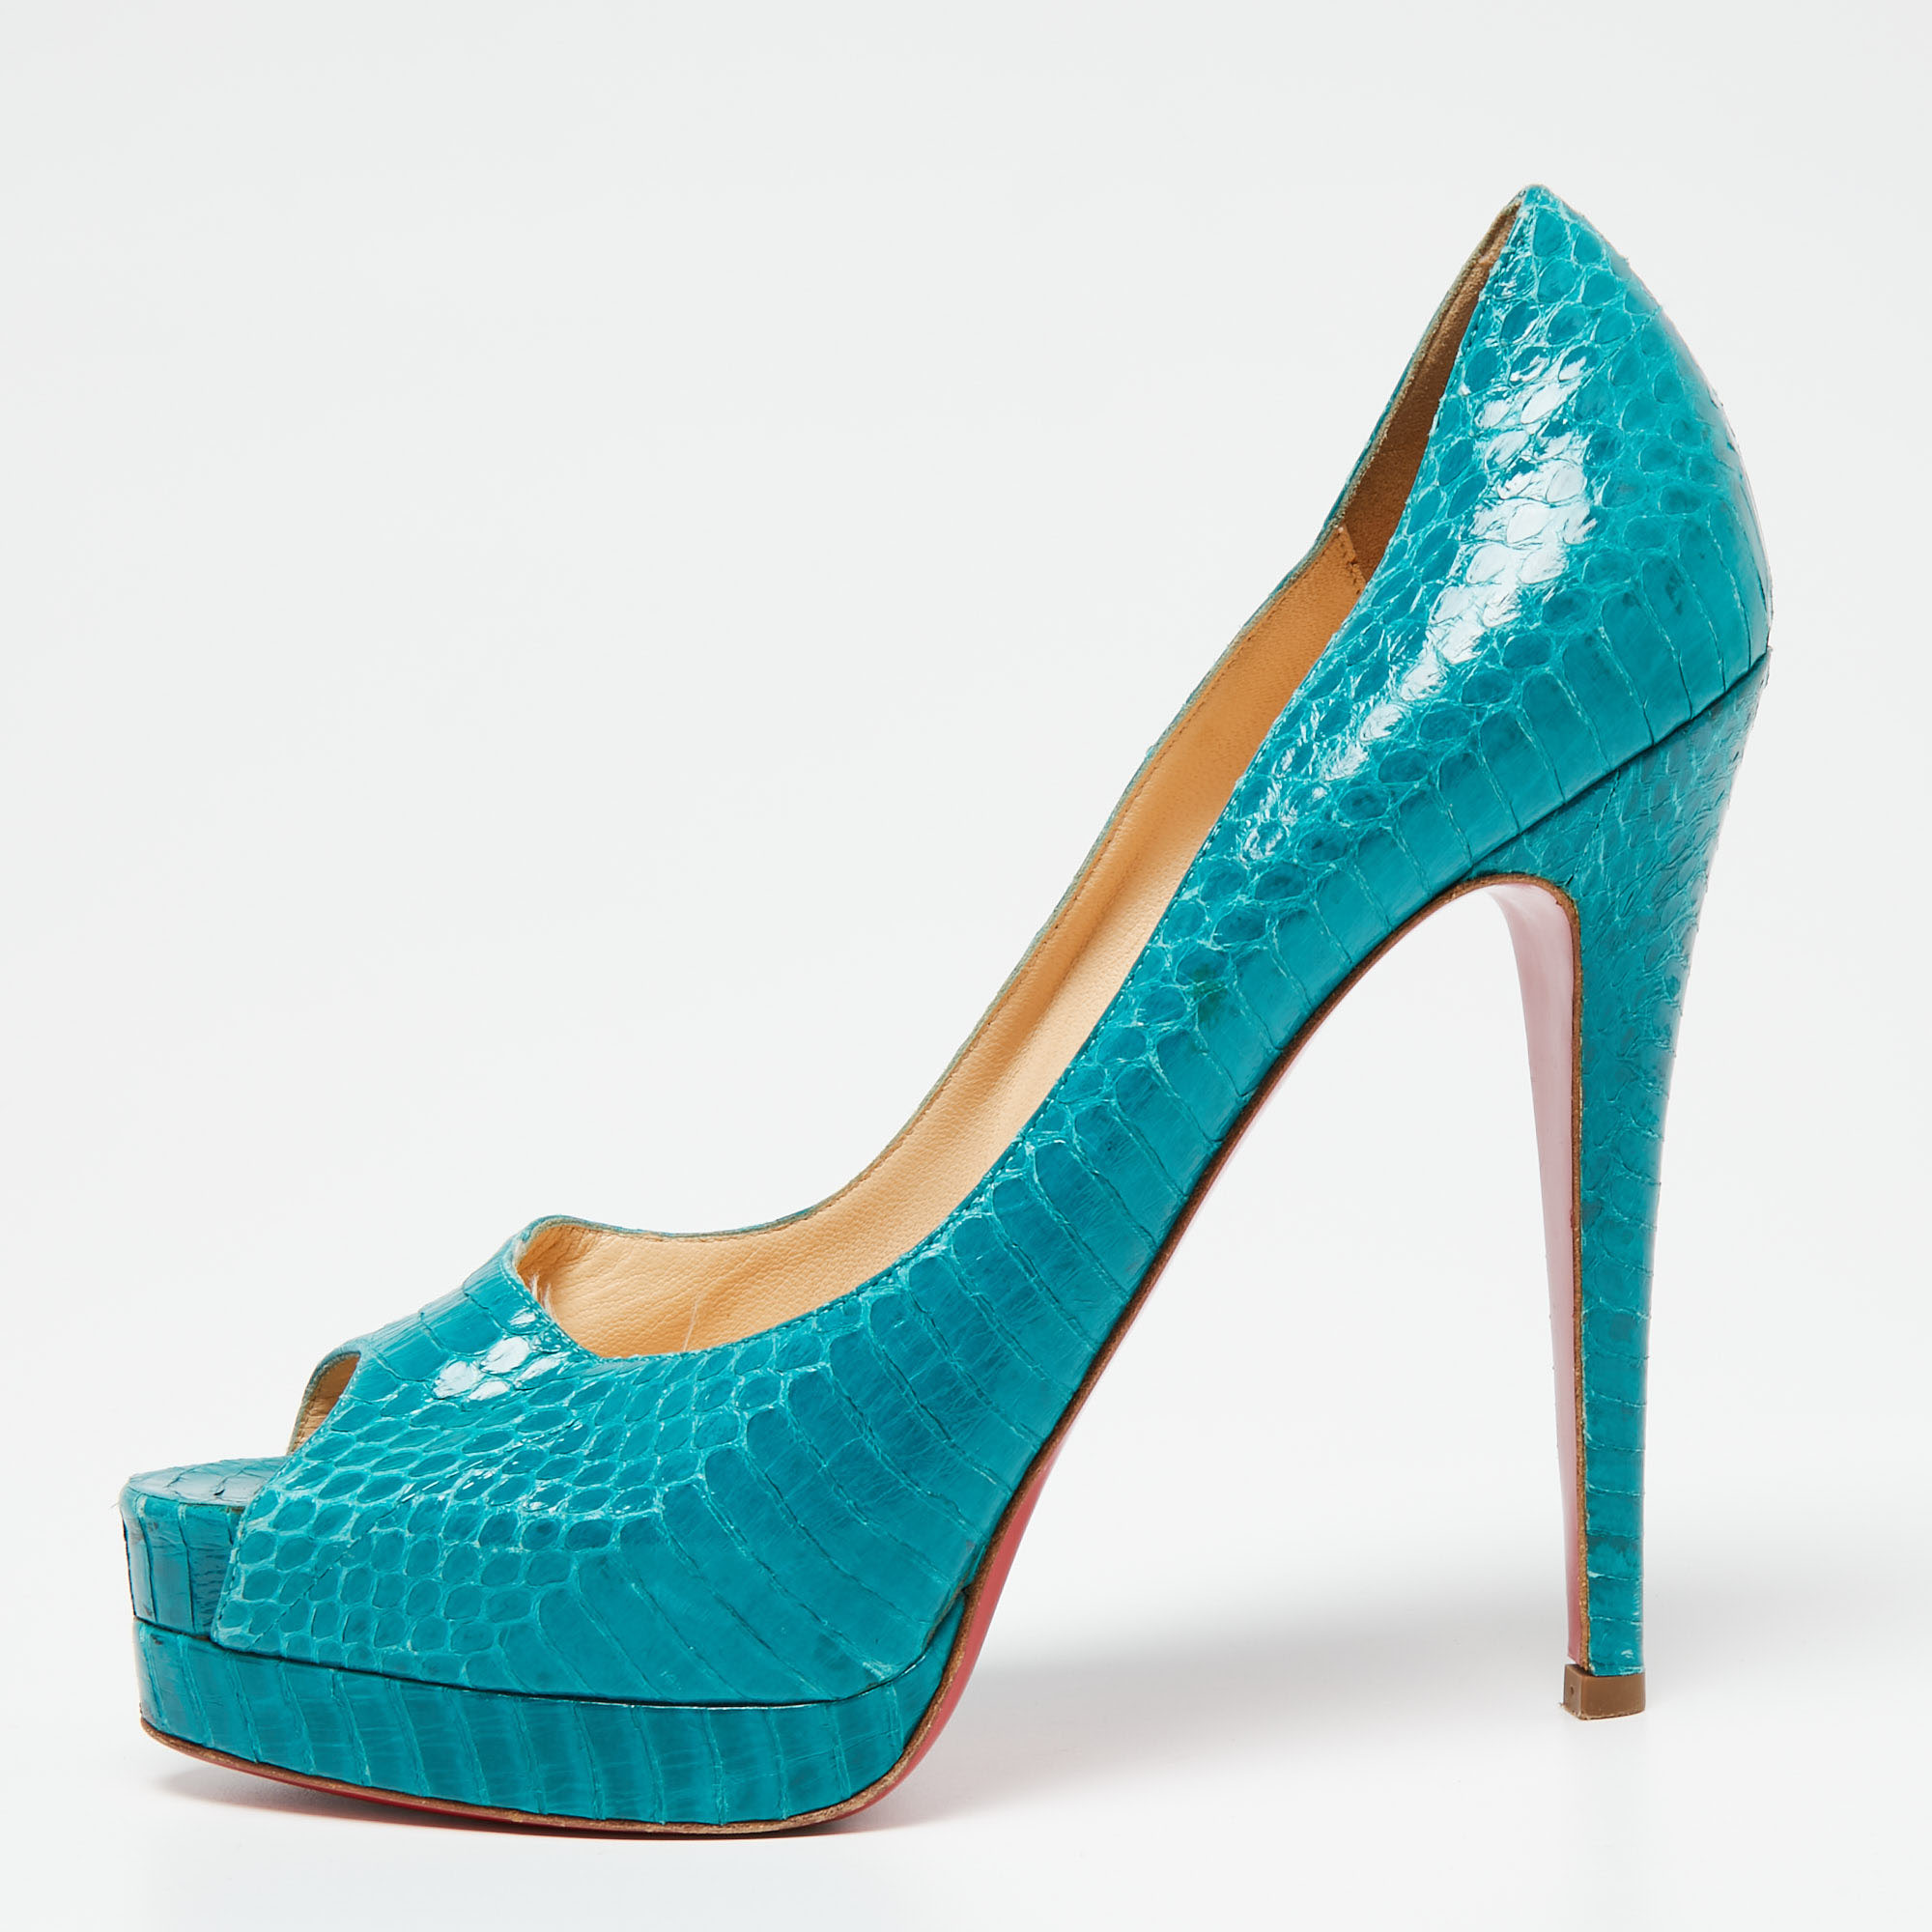 Christian louboutin turquoise python leather altadama peep-toe pumps size 39.5